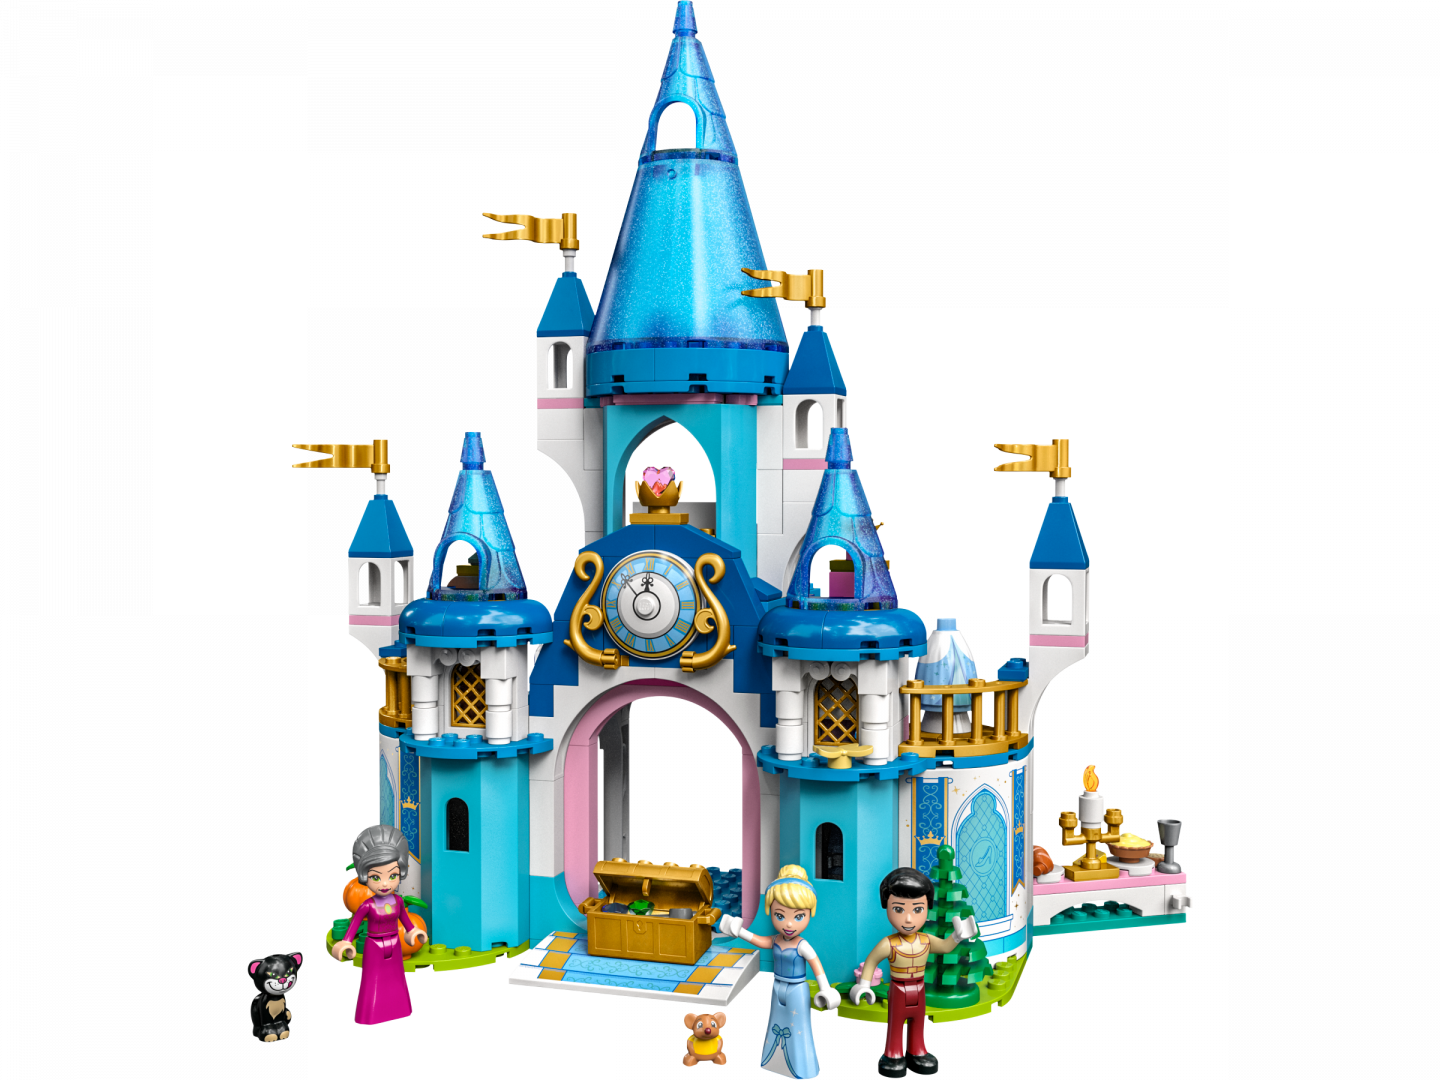 Het kasteel van Assepoester en de knappe prins